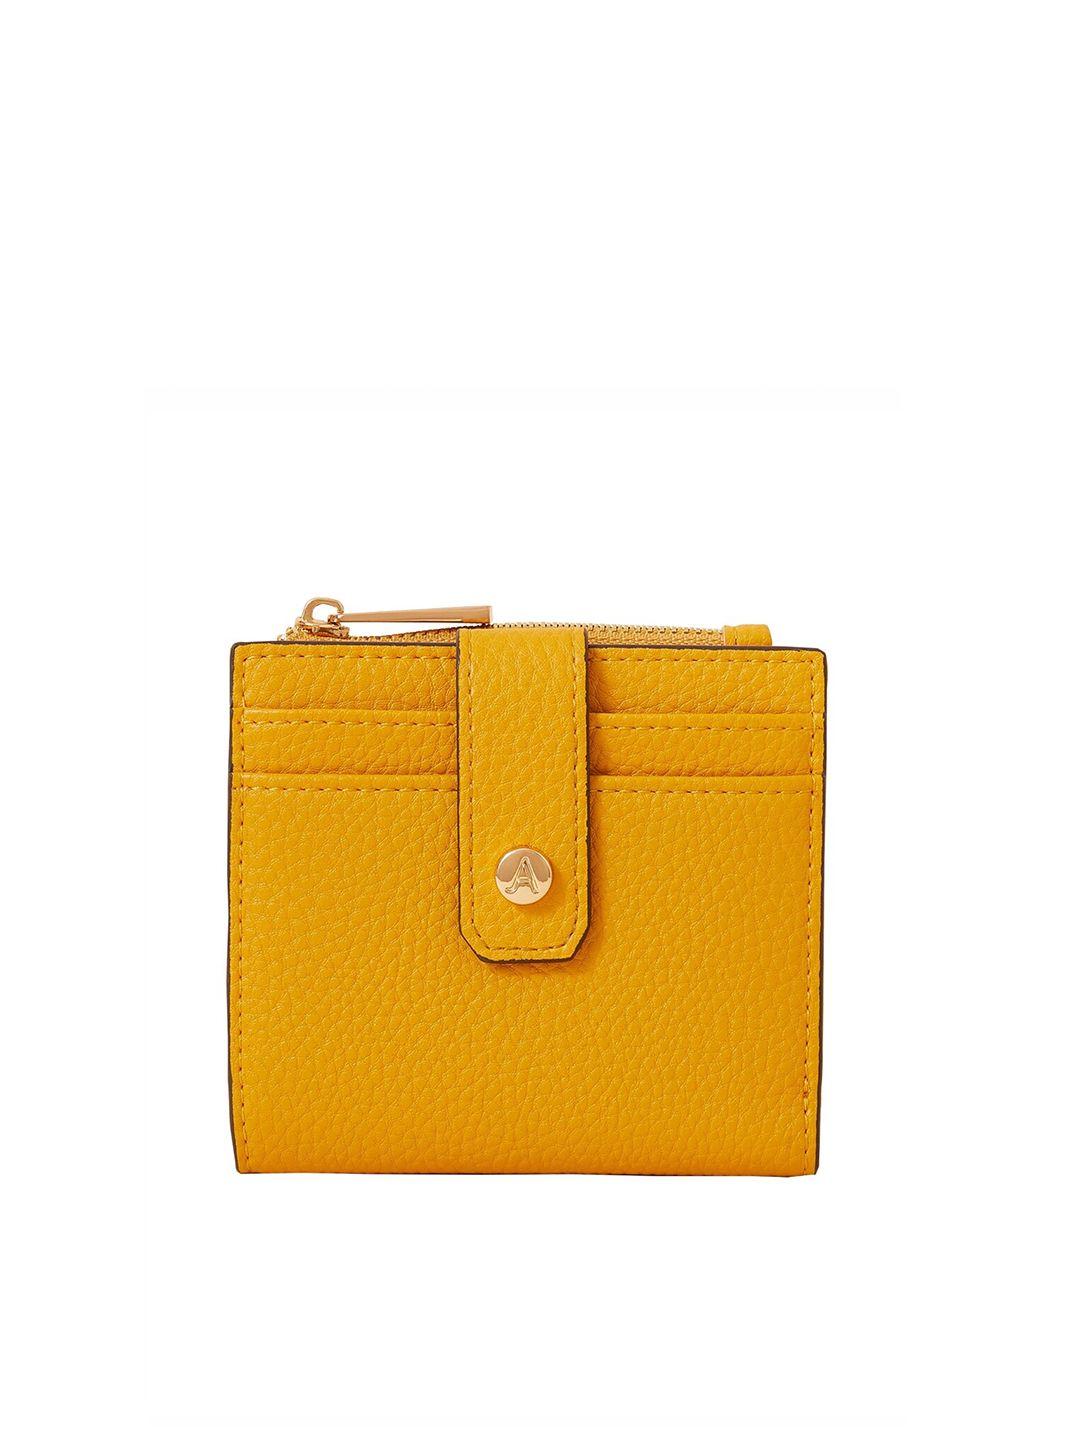 accessorize women yellow textured card holder